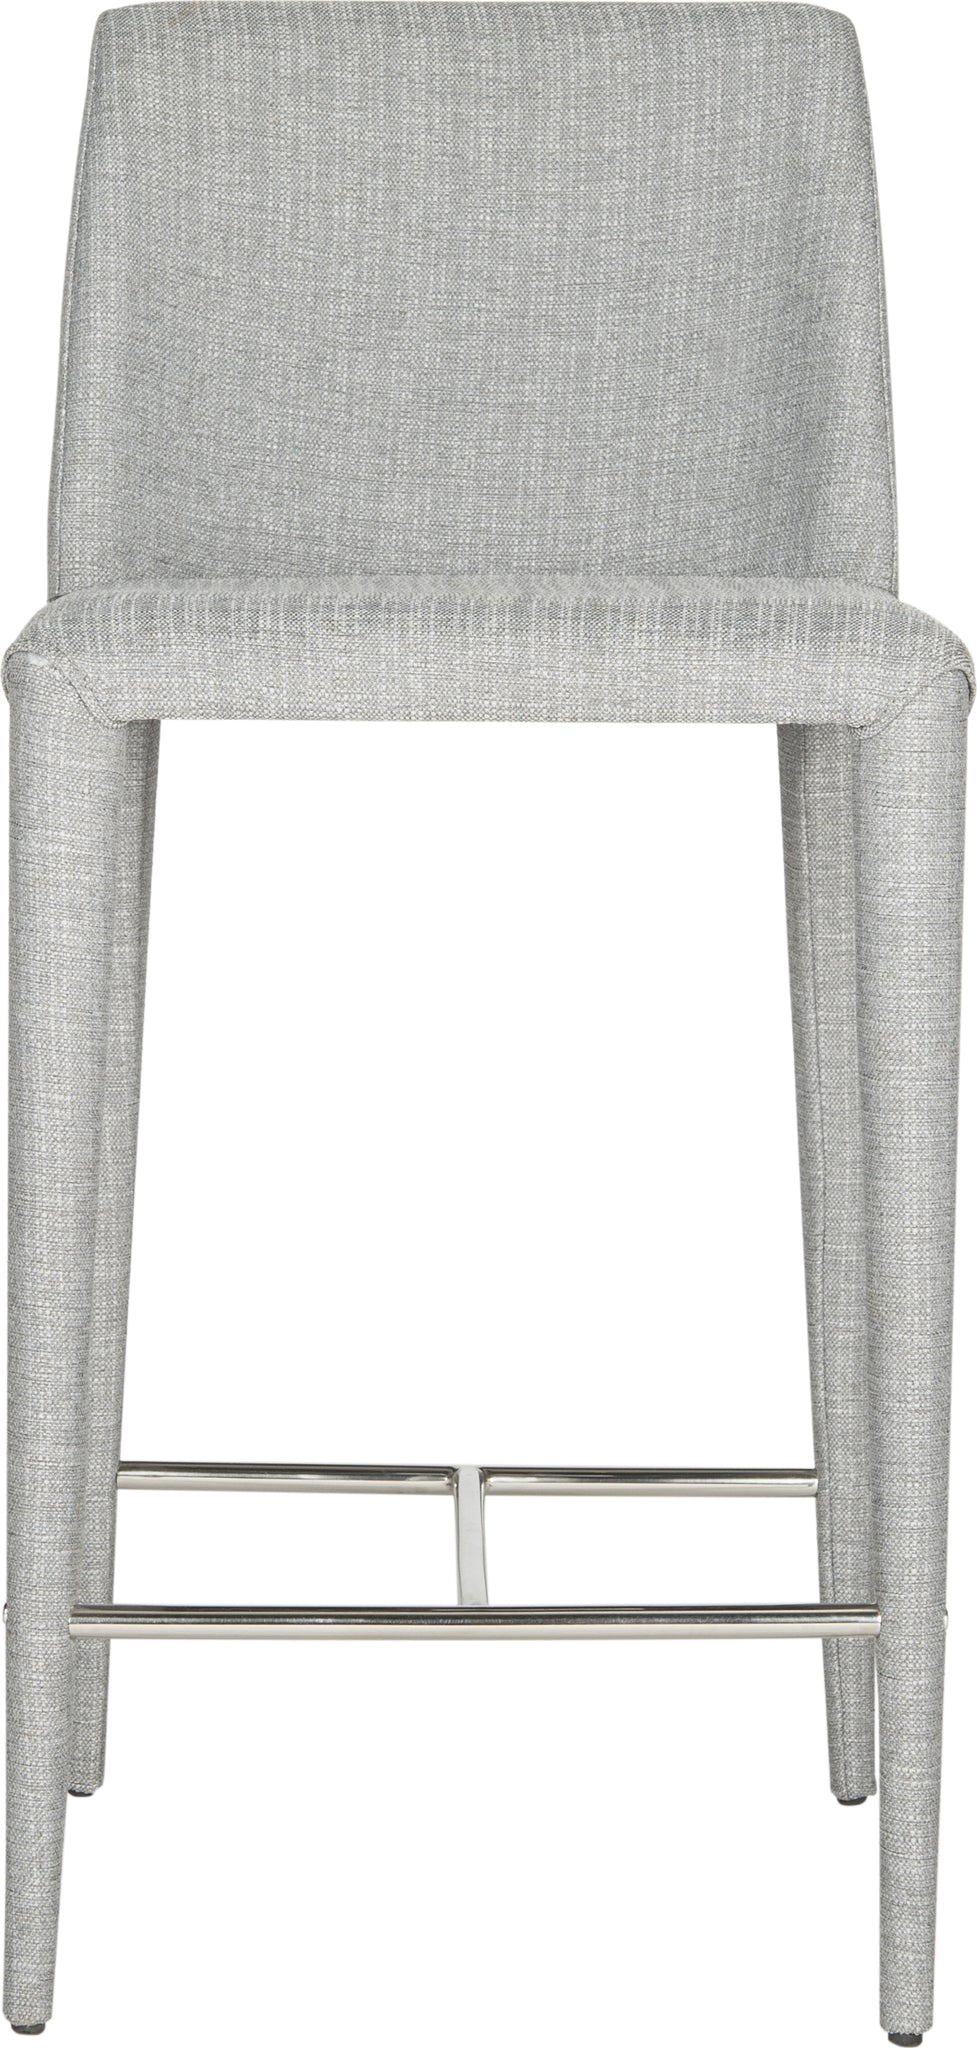 Safavieh Garretson Counter Stool Grey Linen and Chrome Furniture main image